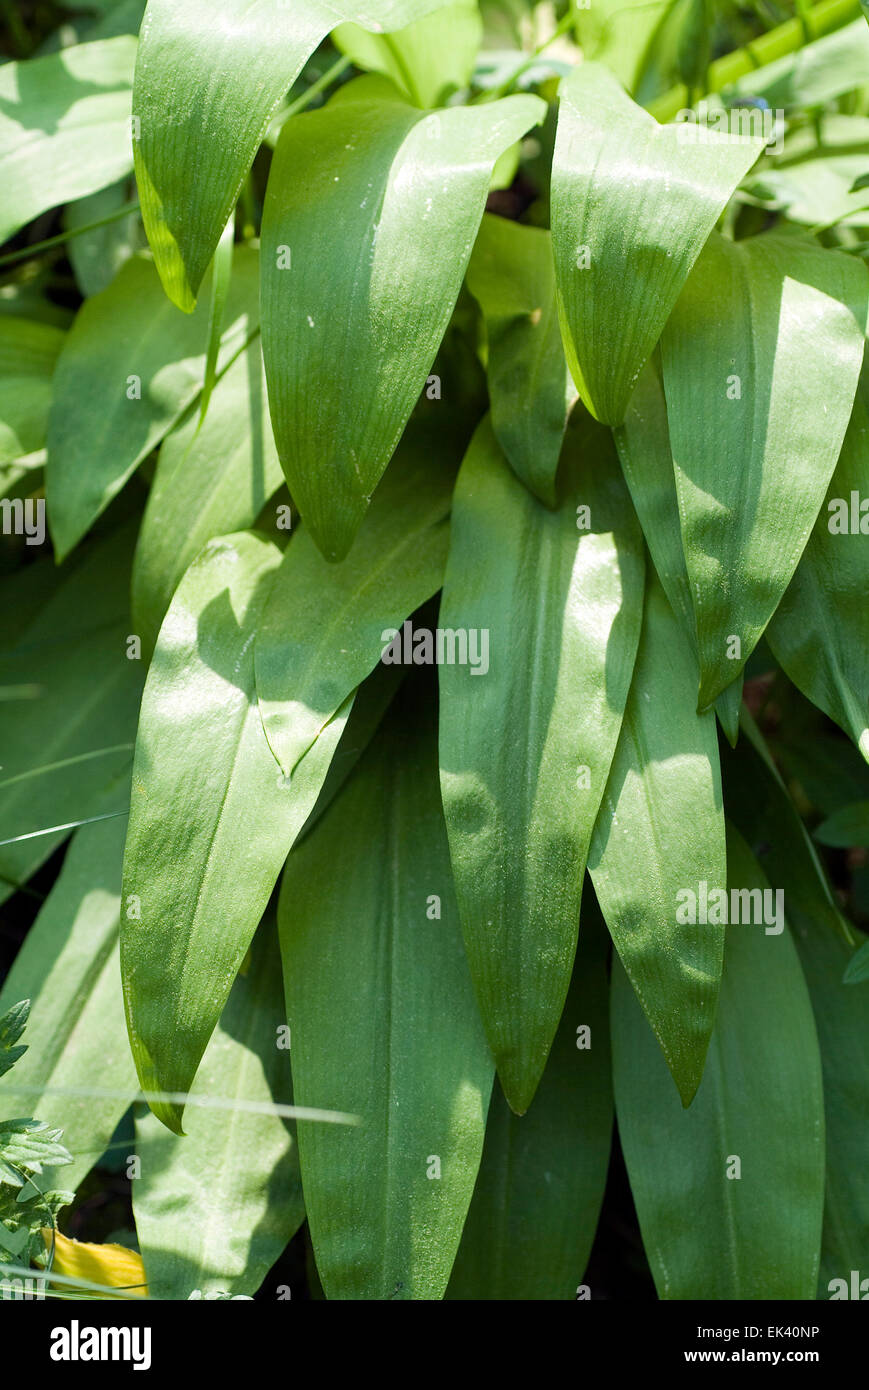 Bärlauch Stoffen Bären Lauch Bärlauch Holz Knoblauch (Allium Ursinum) Stockfoto